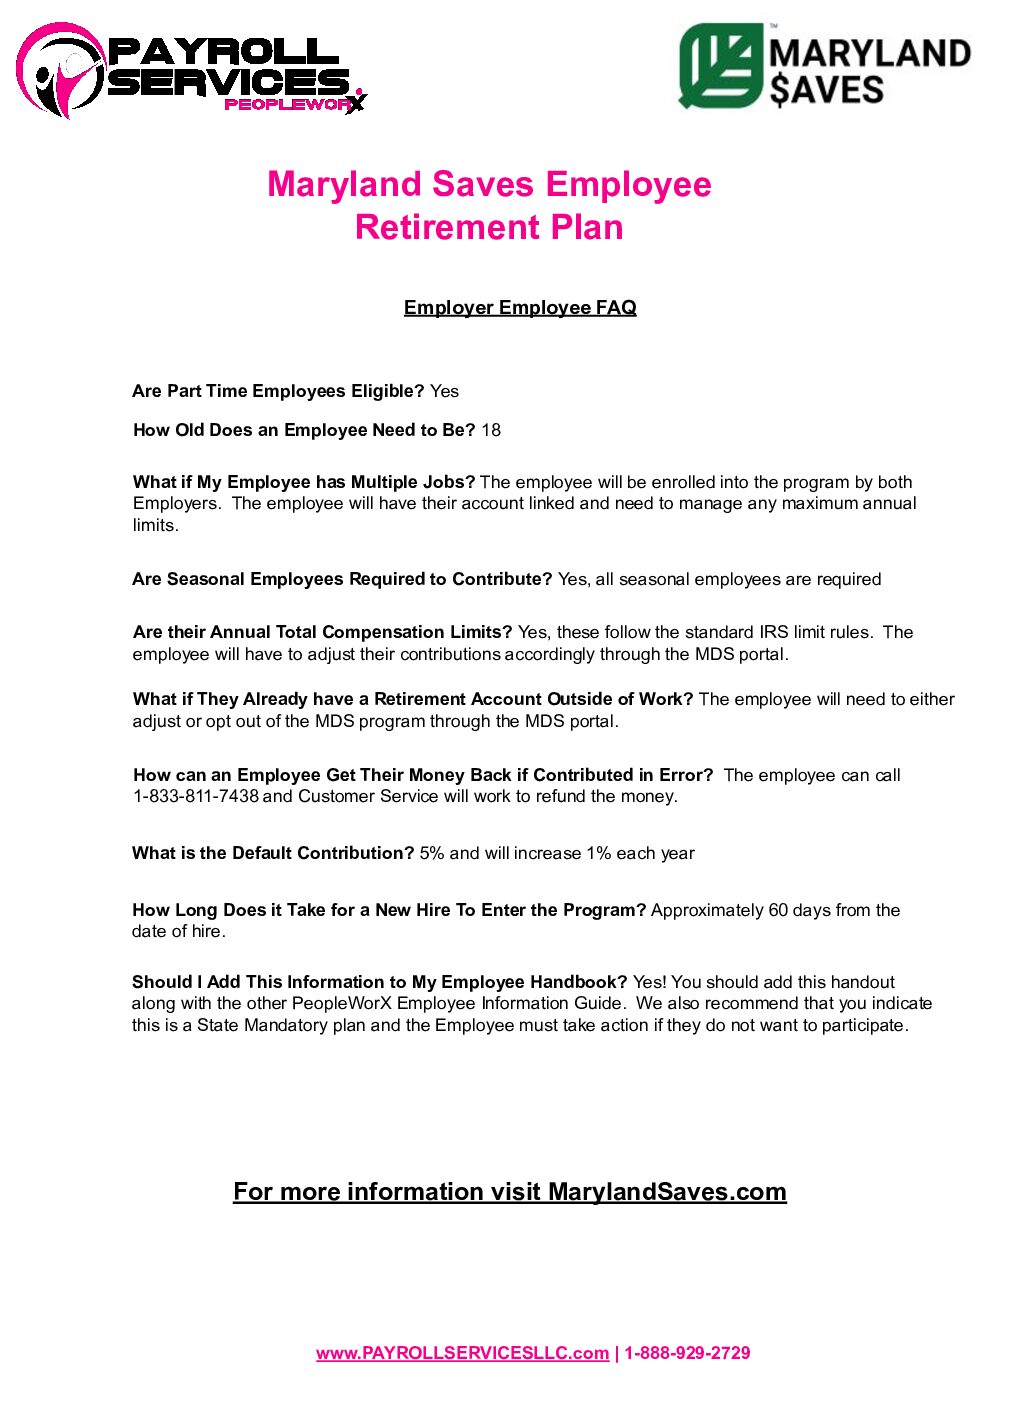 Maryland Saves Employee Retirement Plan